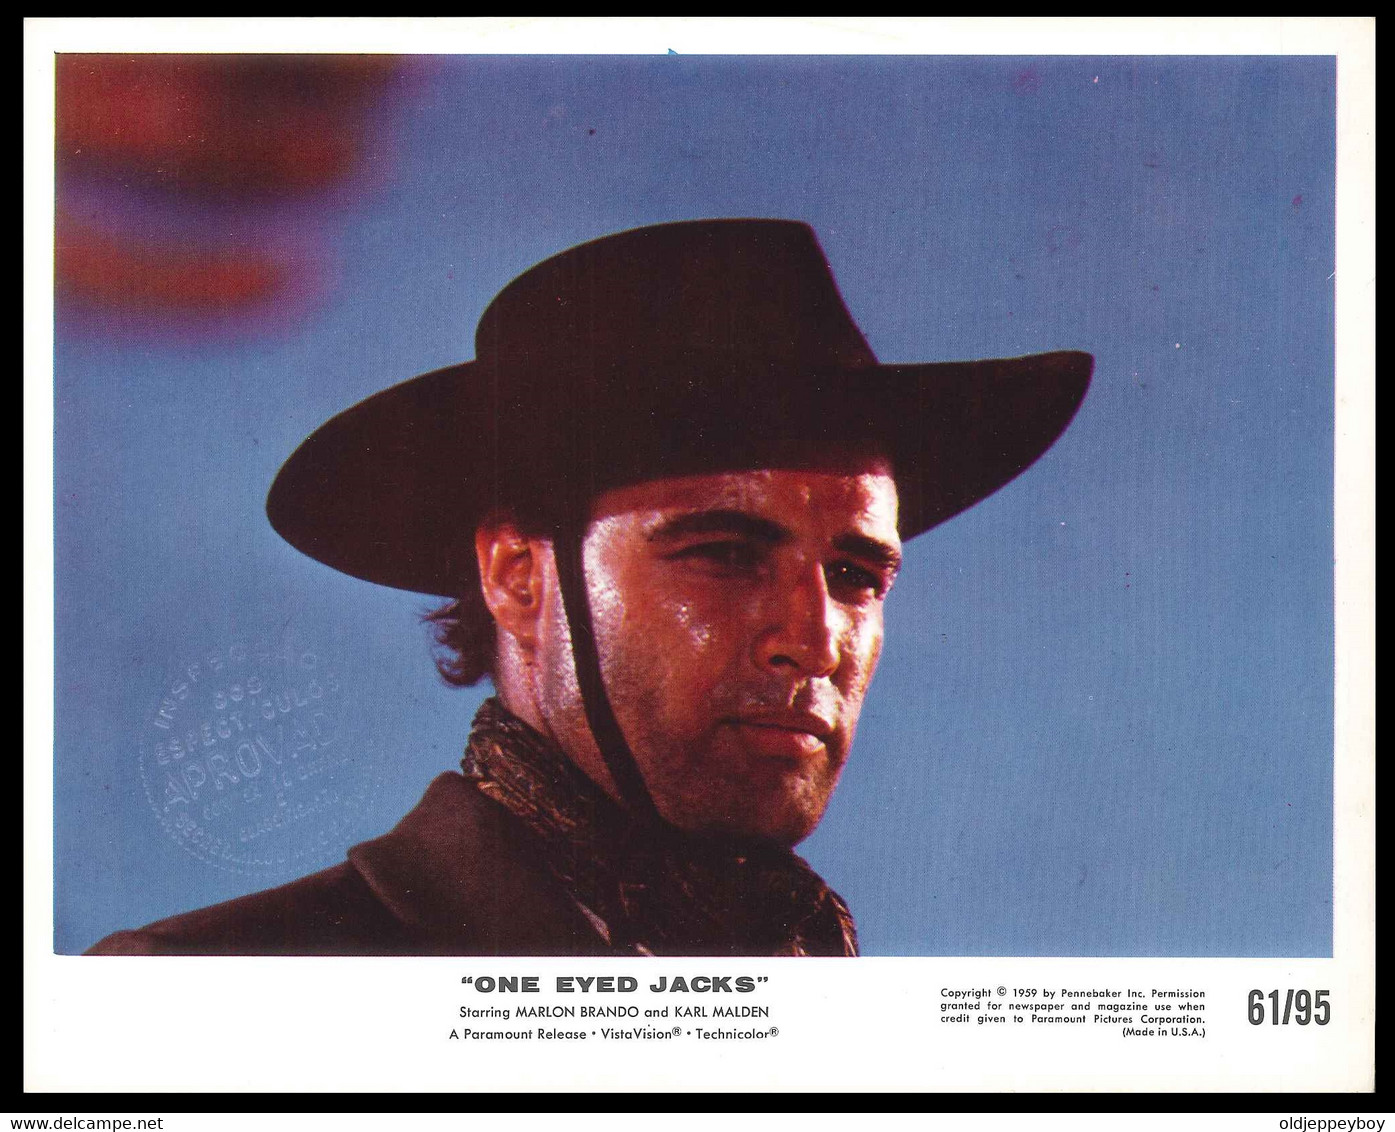 One Eyed Jacks-Marlon Brando-Karl Malden - 20 X 25 Cm - Colour - Movie Still- Western Paramount Release Technicolour - Foto's